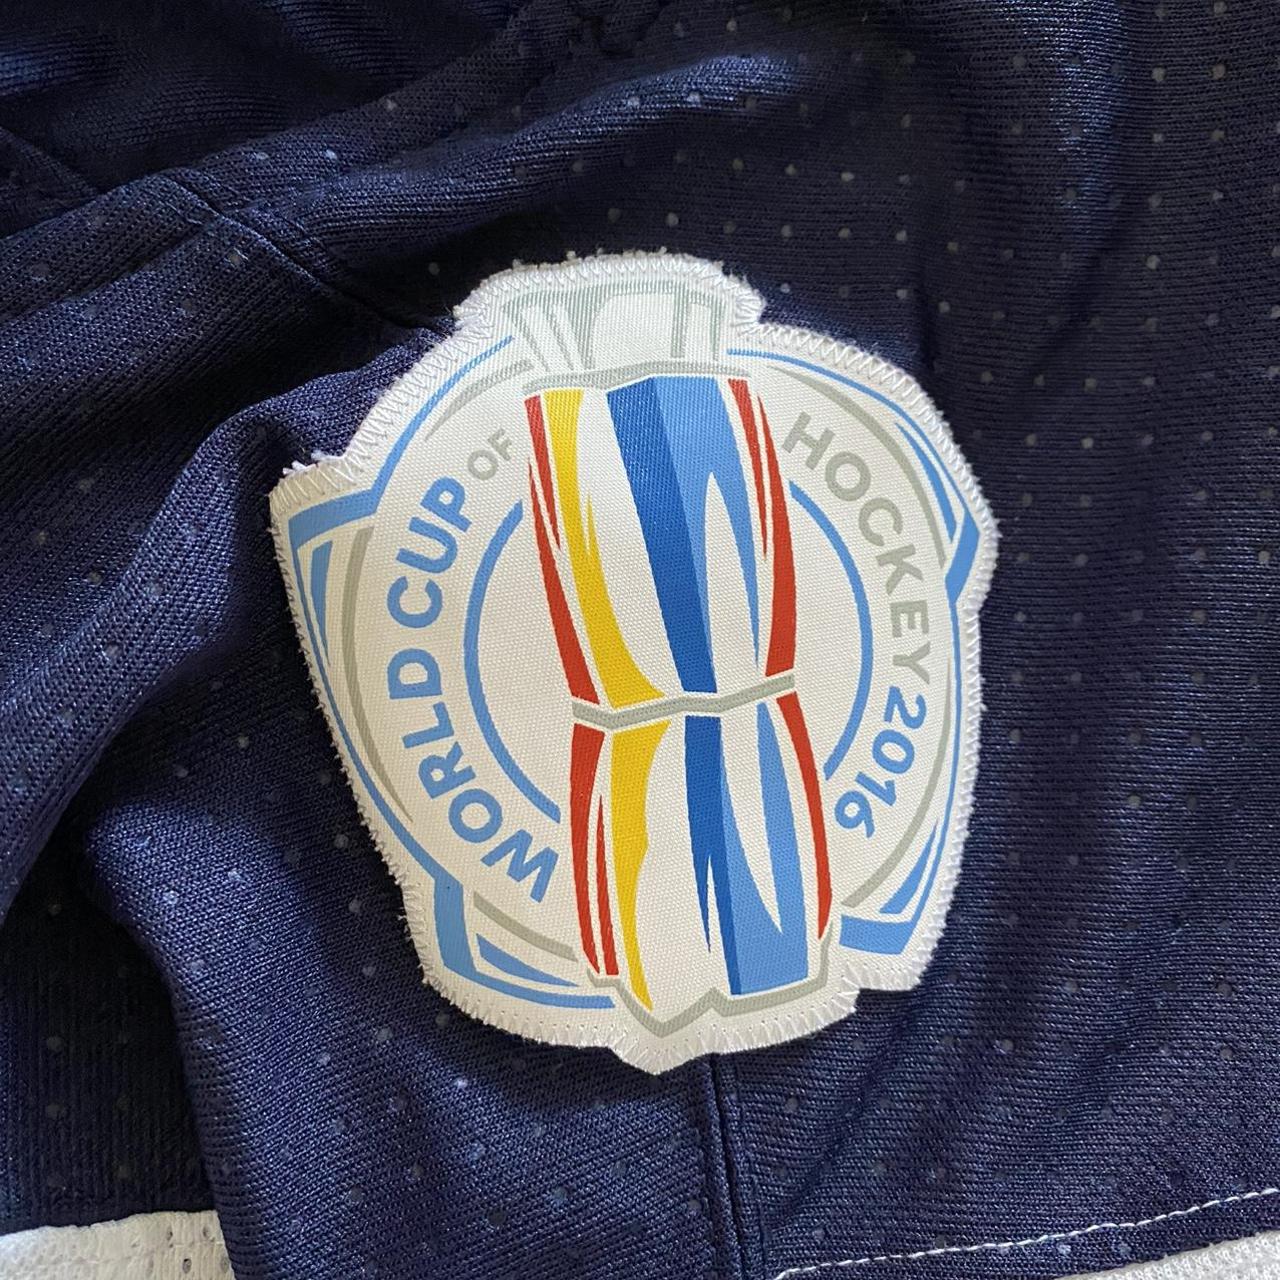 2016 Adidas Hockey World Cup Team USA hockey jersey